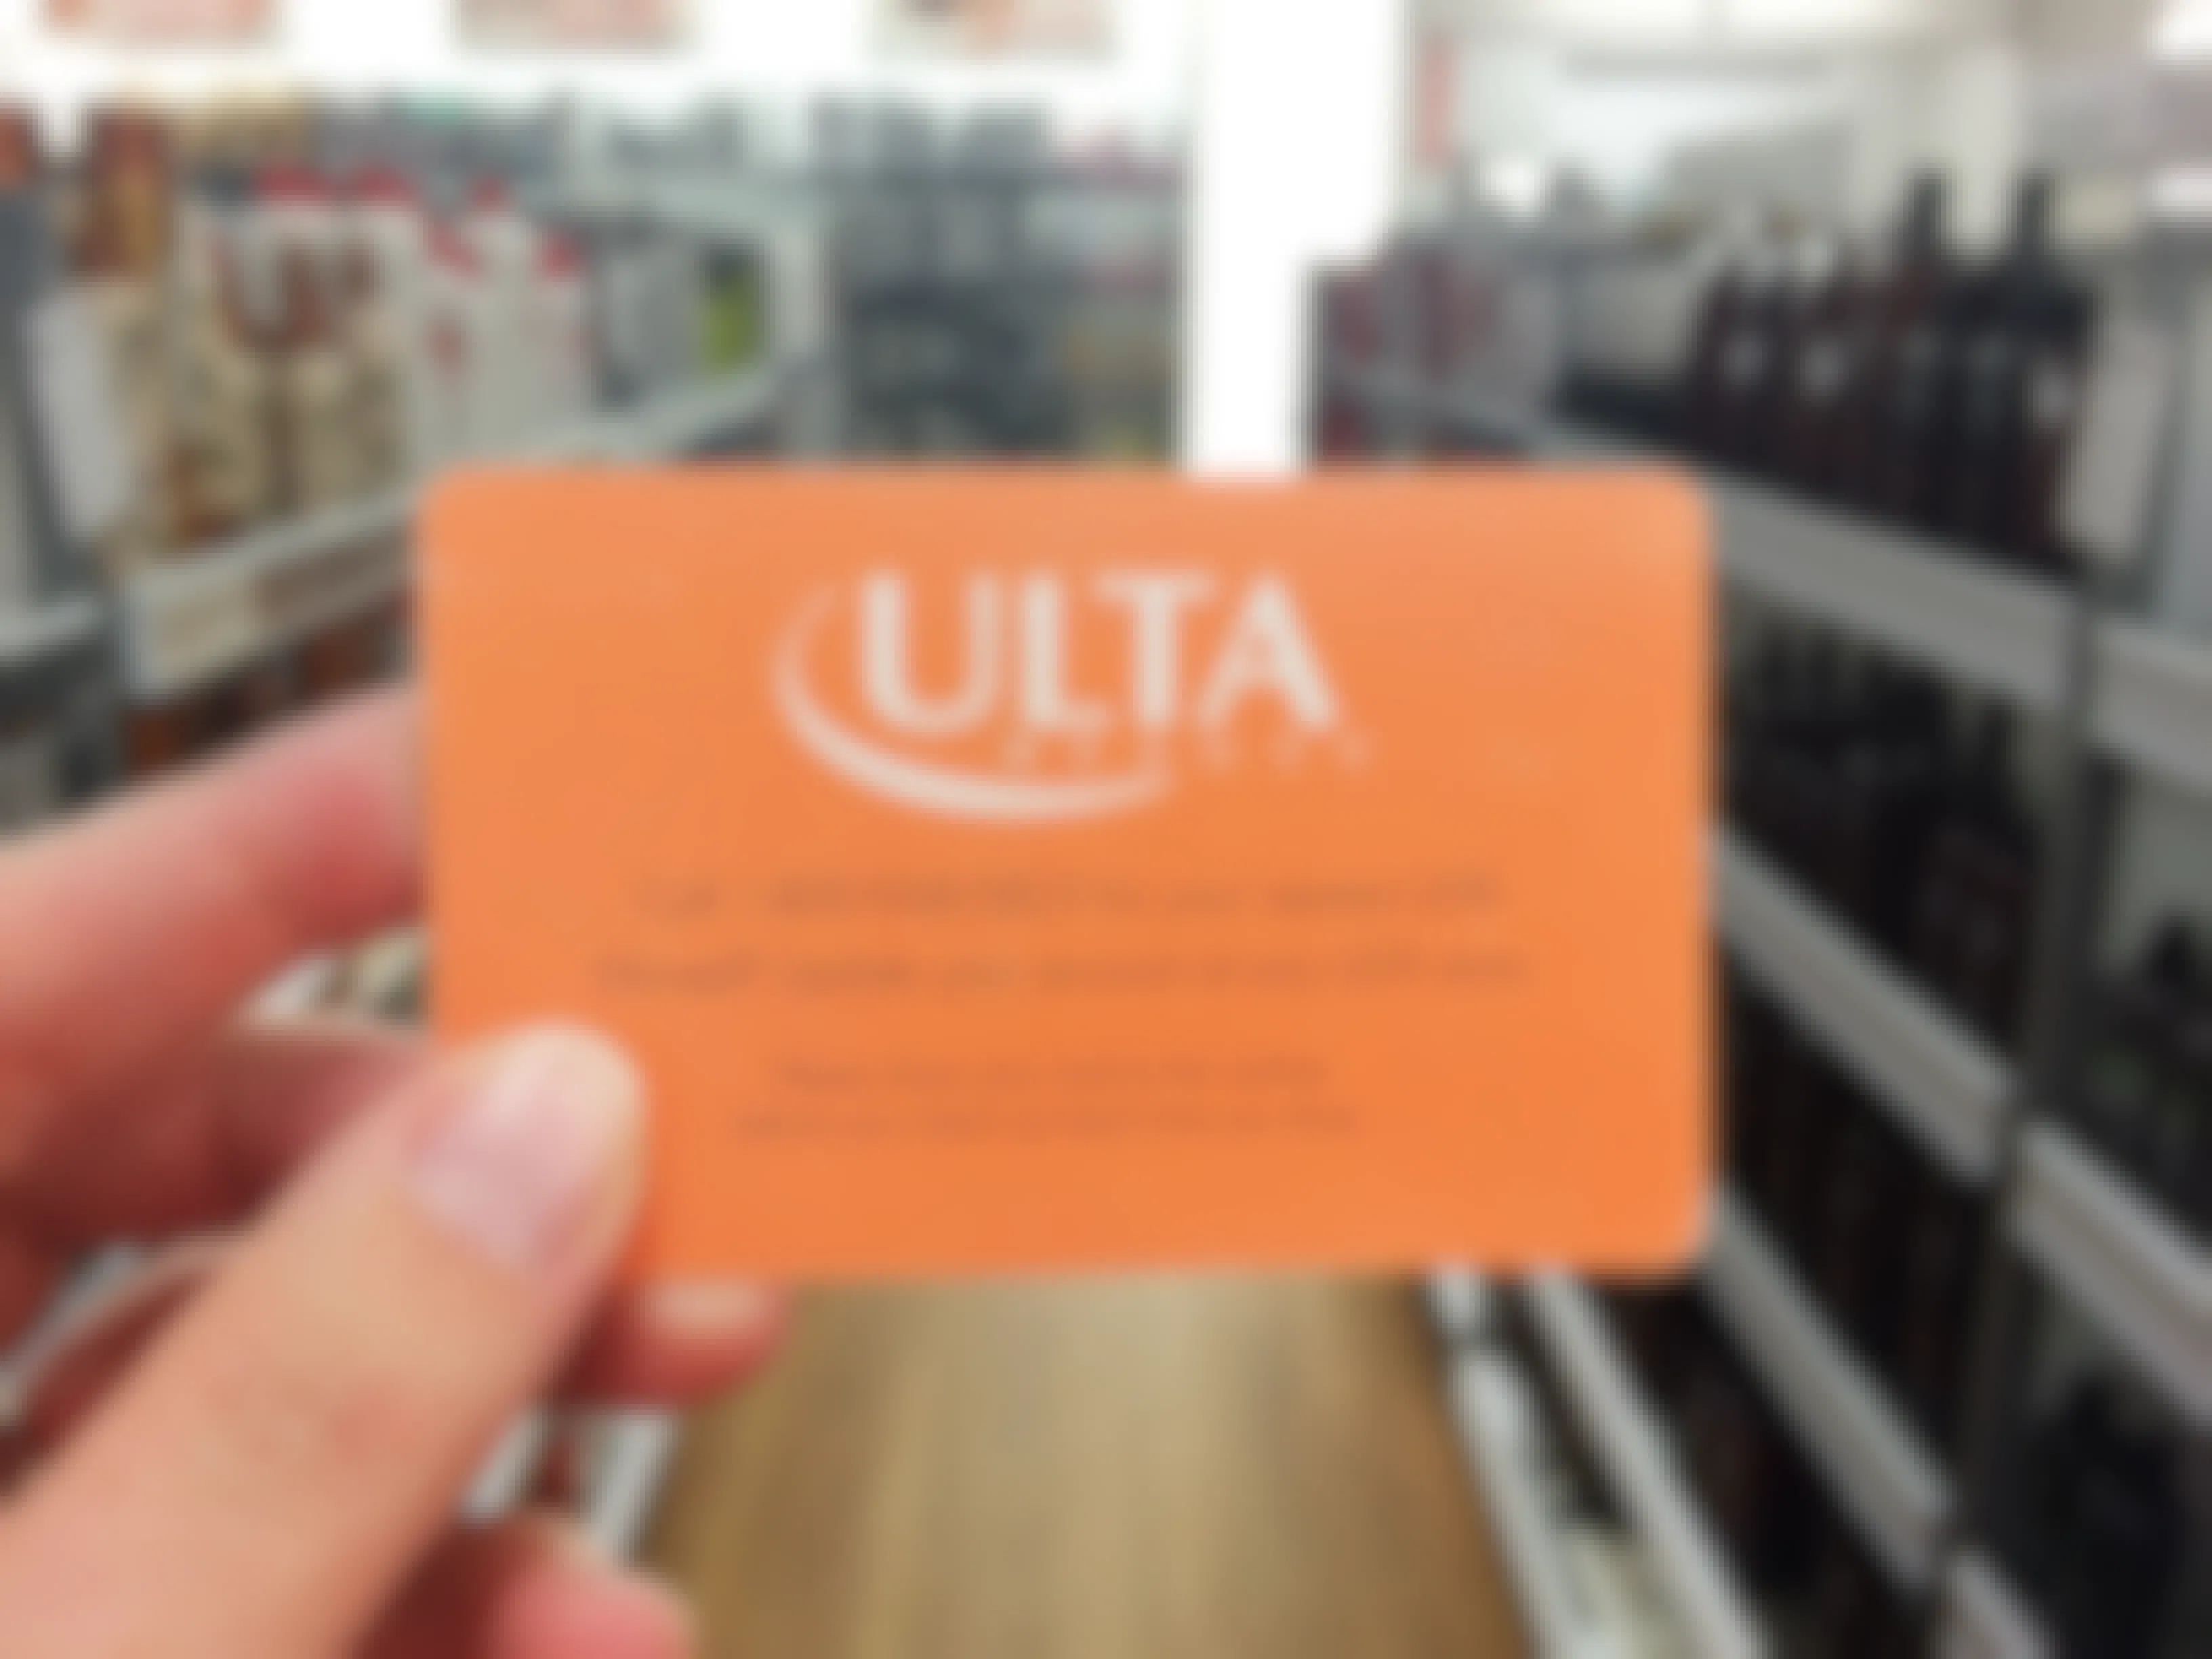 Choosing to shop stores with good loyalty programs like Ulta's Ultamate Rewards.